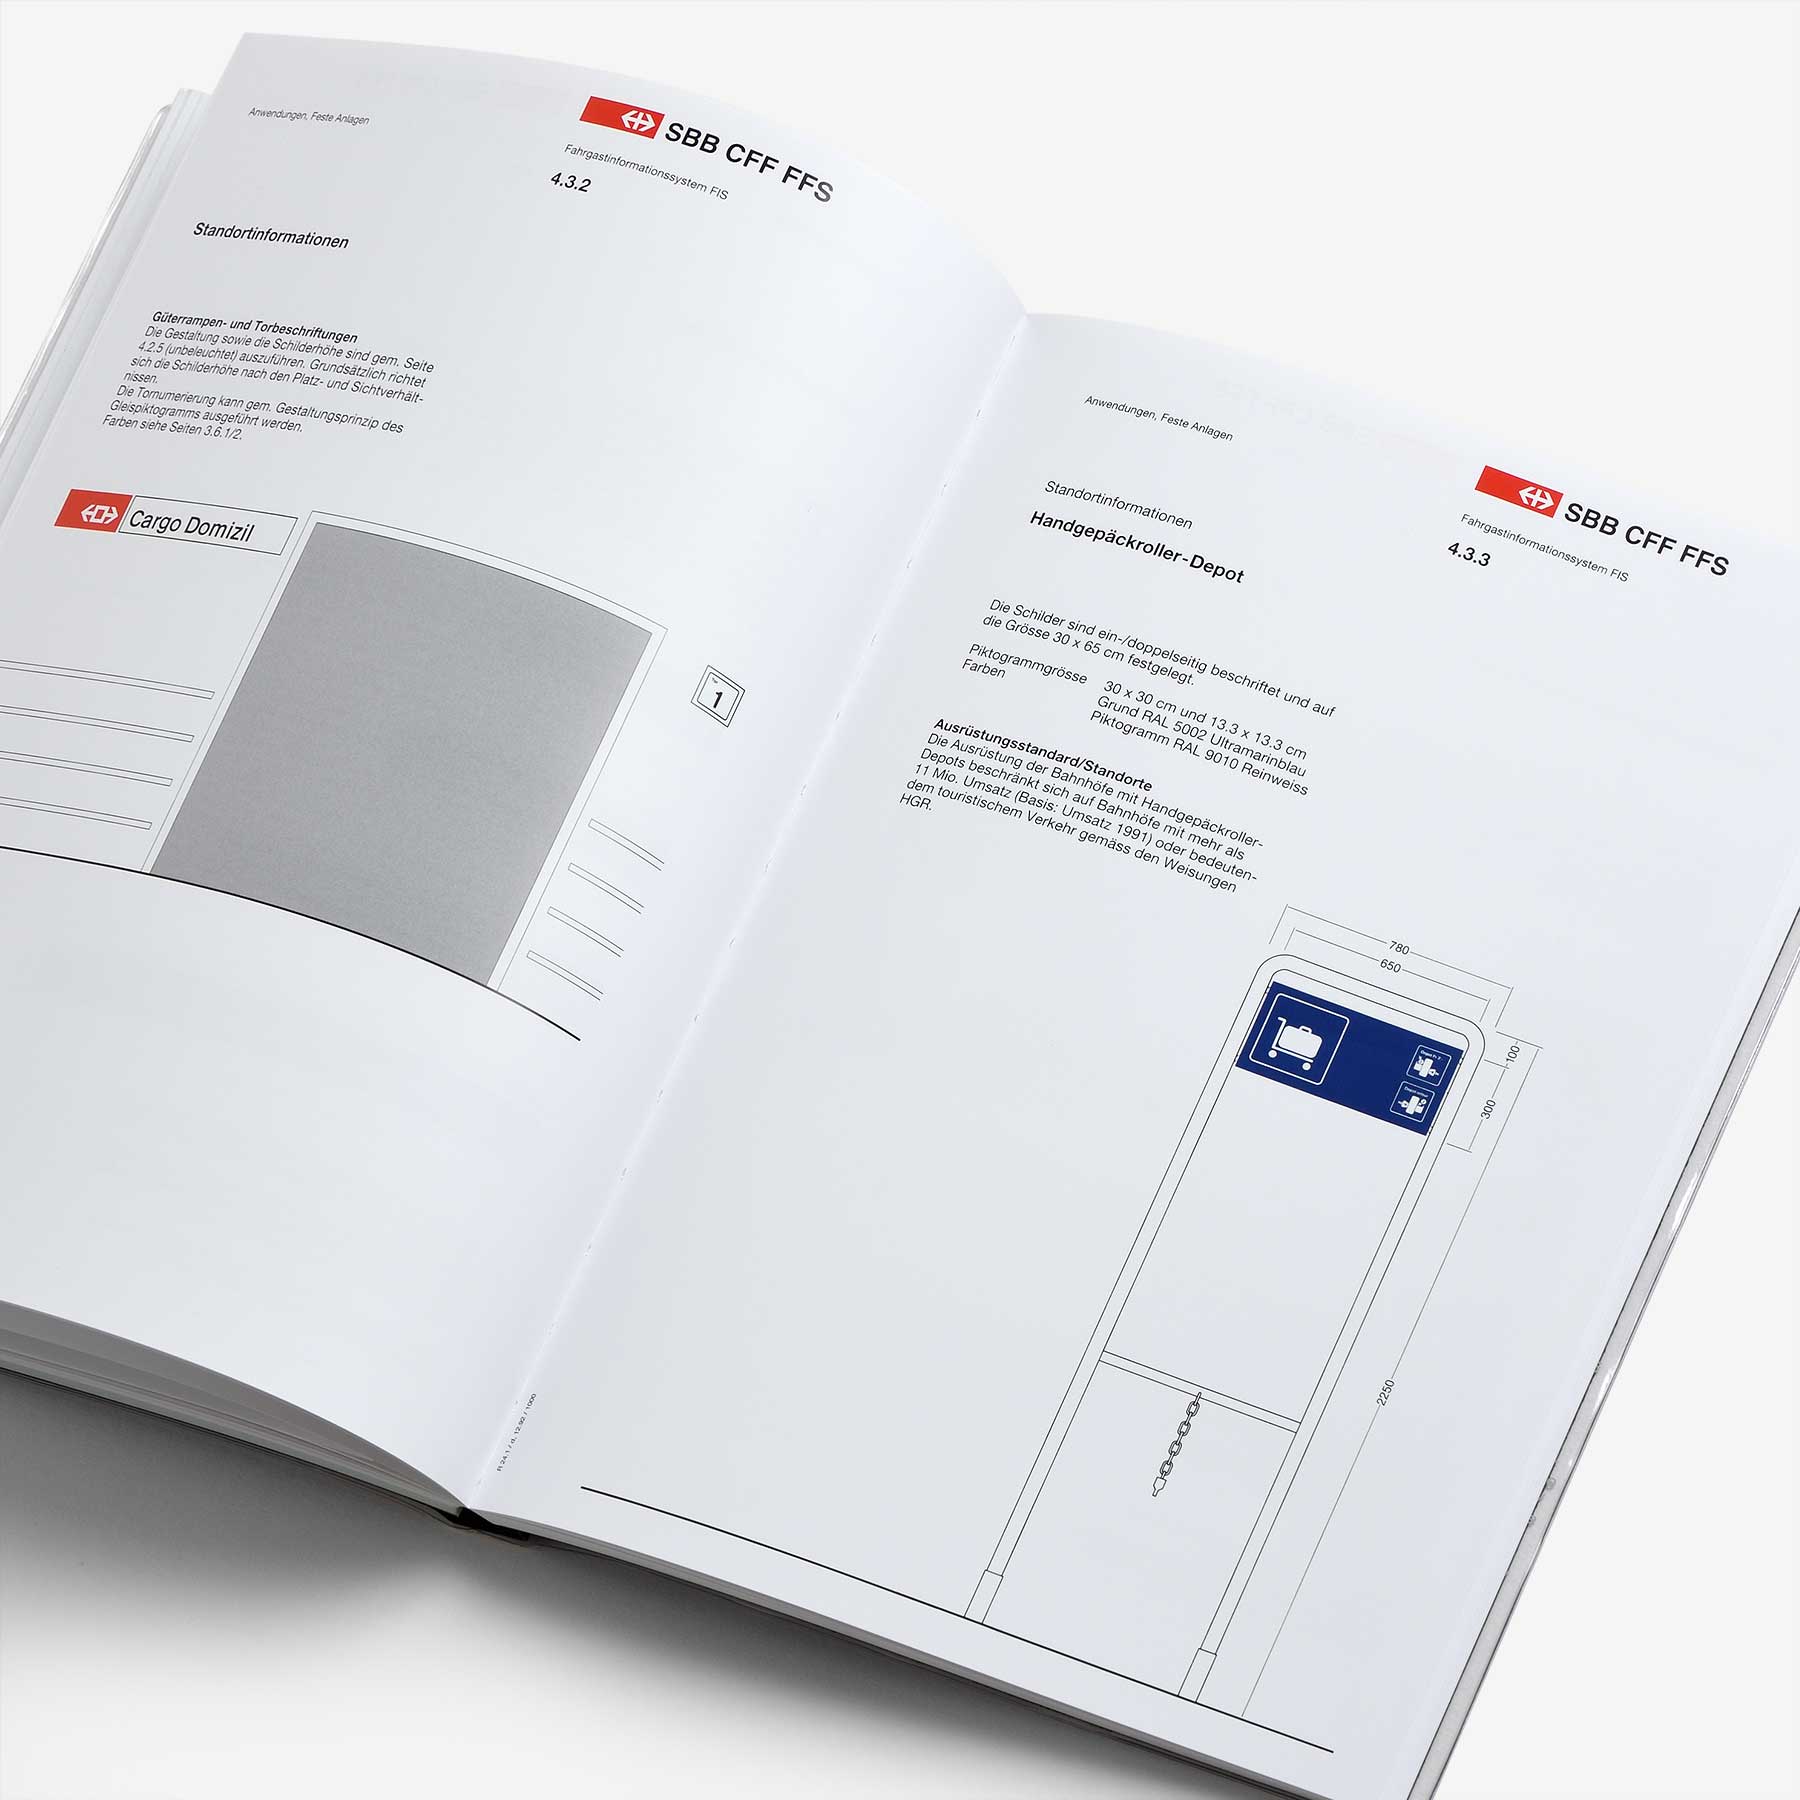 Passenger Information System: Design Manual for the Swiss Federal Railways by Josef Müller-Brockmann